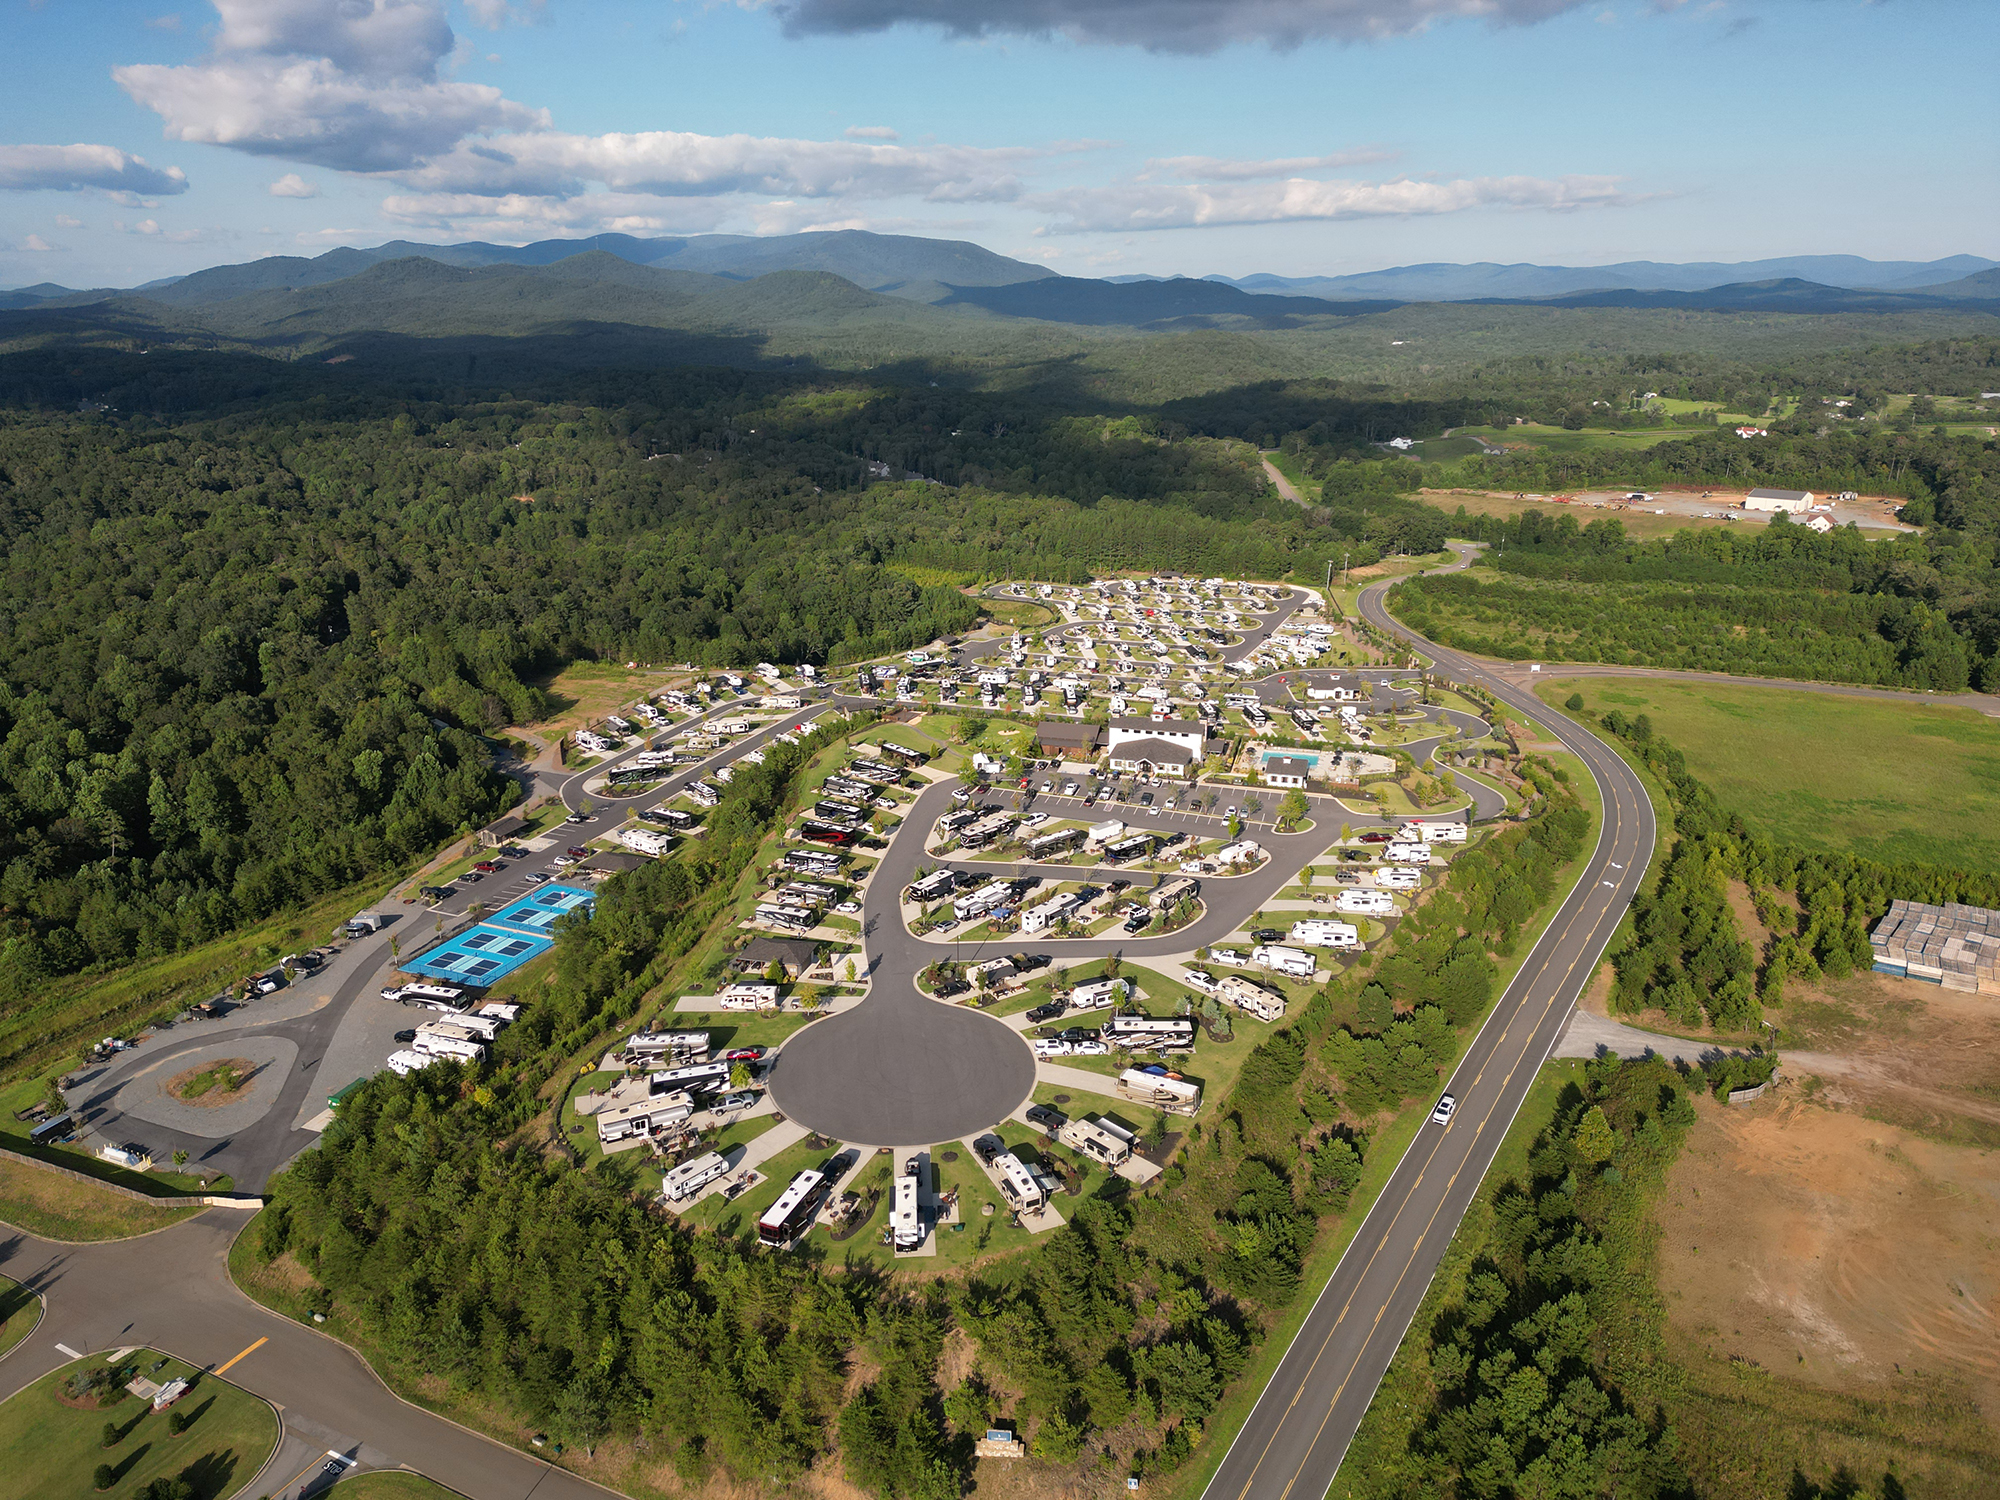 Aerial view of RV resort nestled among green hills